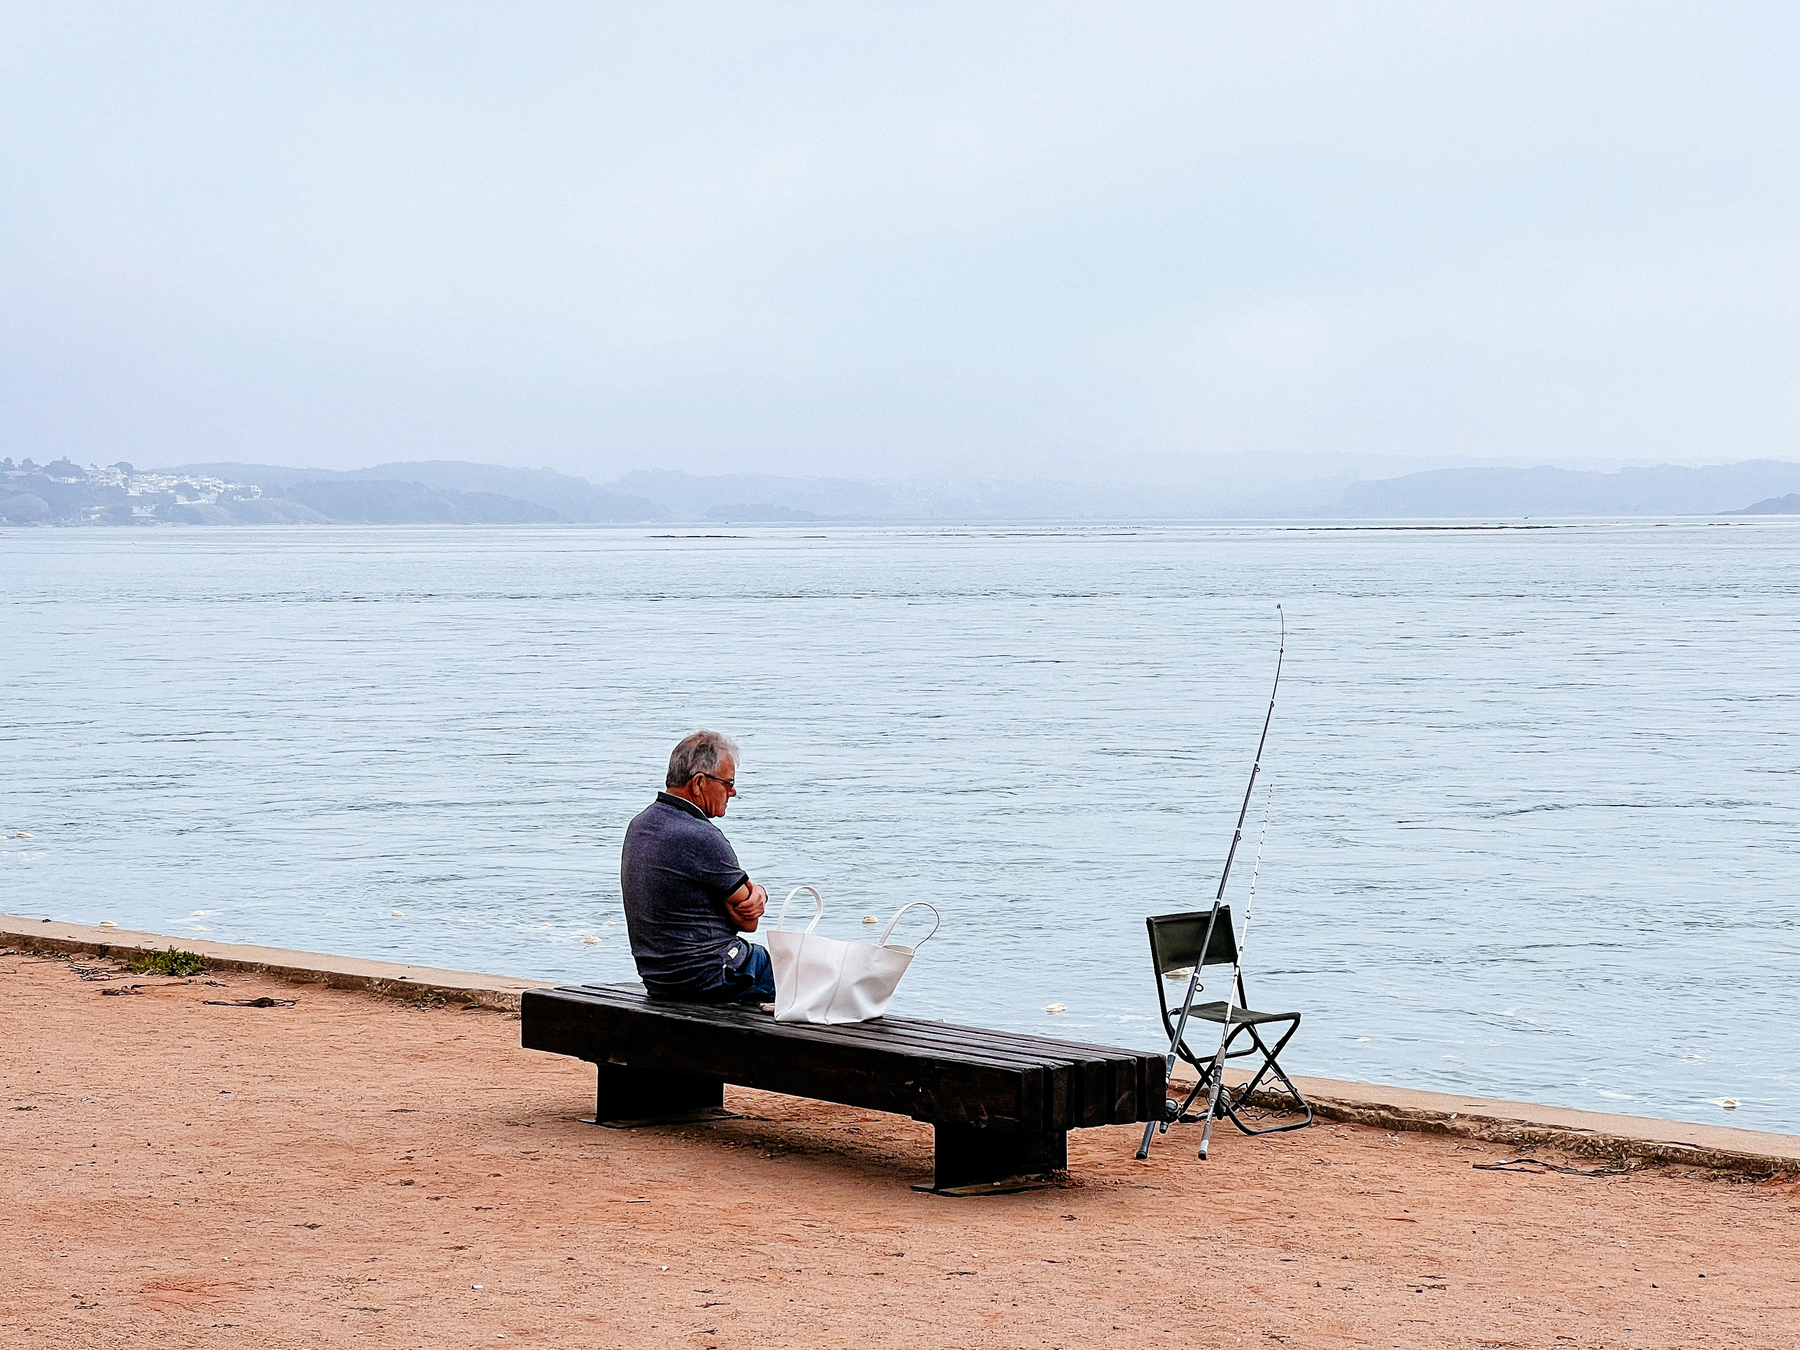 A fisherman by the lake